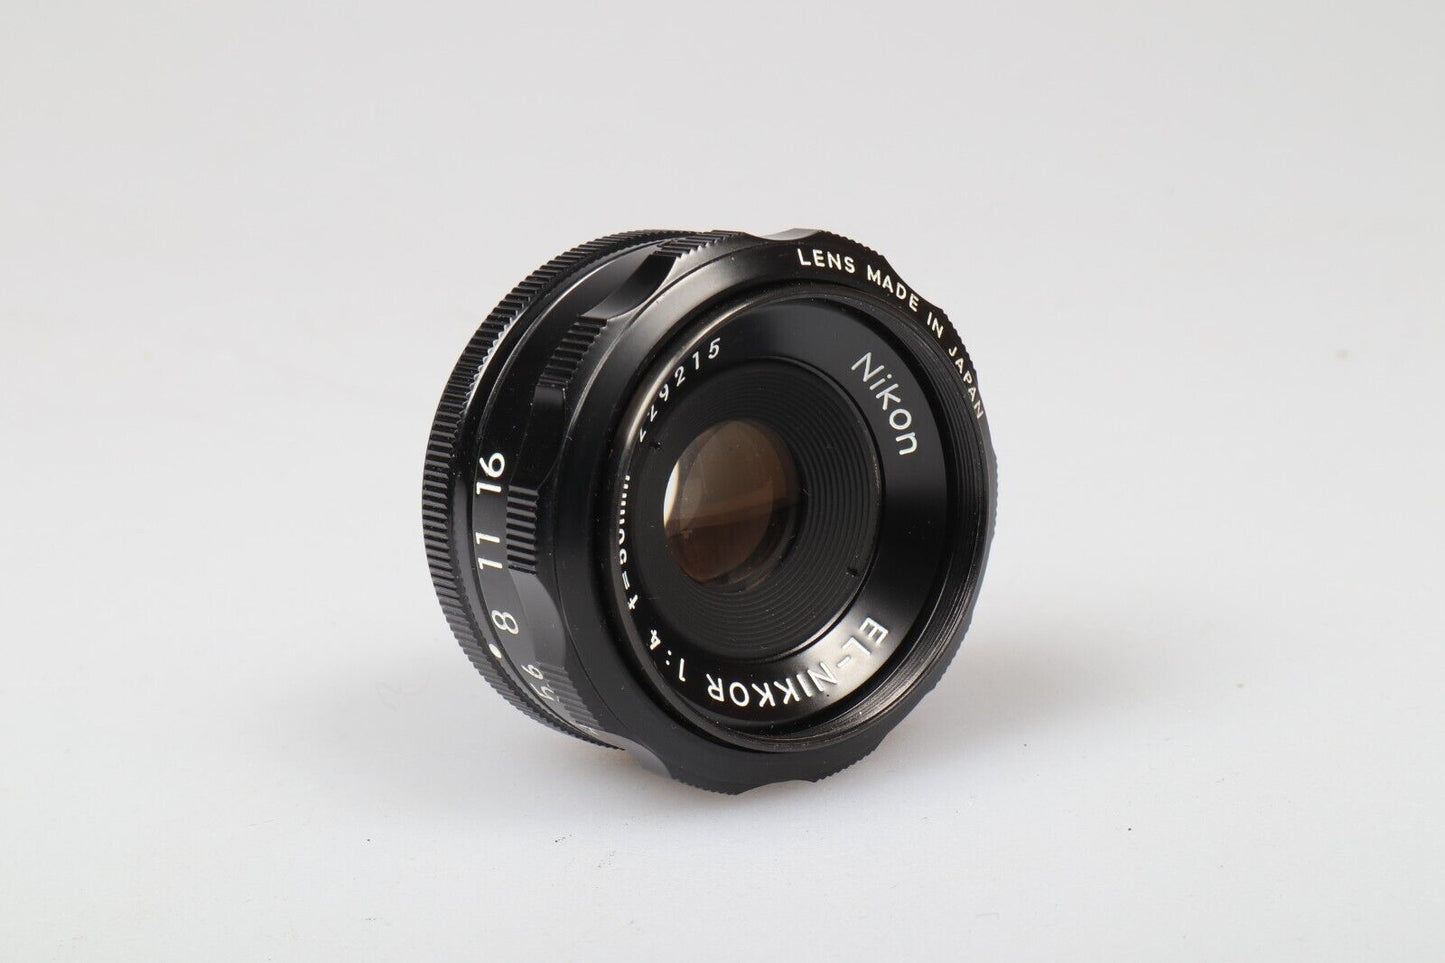 Nikon CP-2 | El Nikkor 229215 50mm f/4 Enlarger Lens